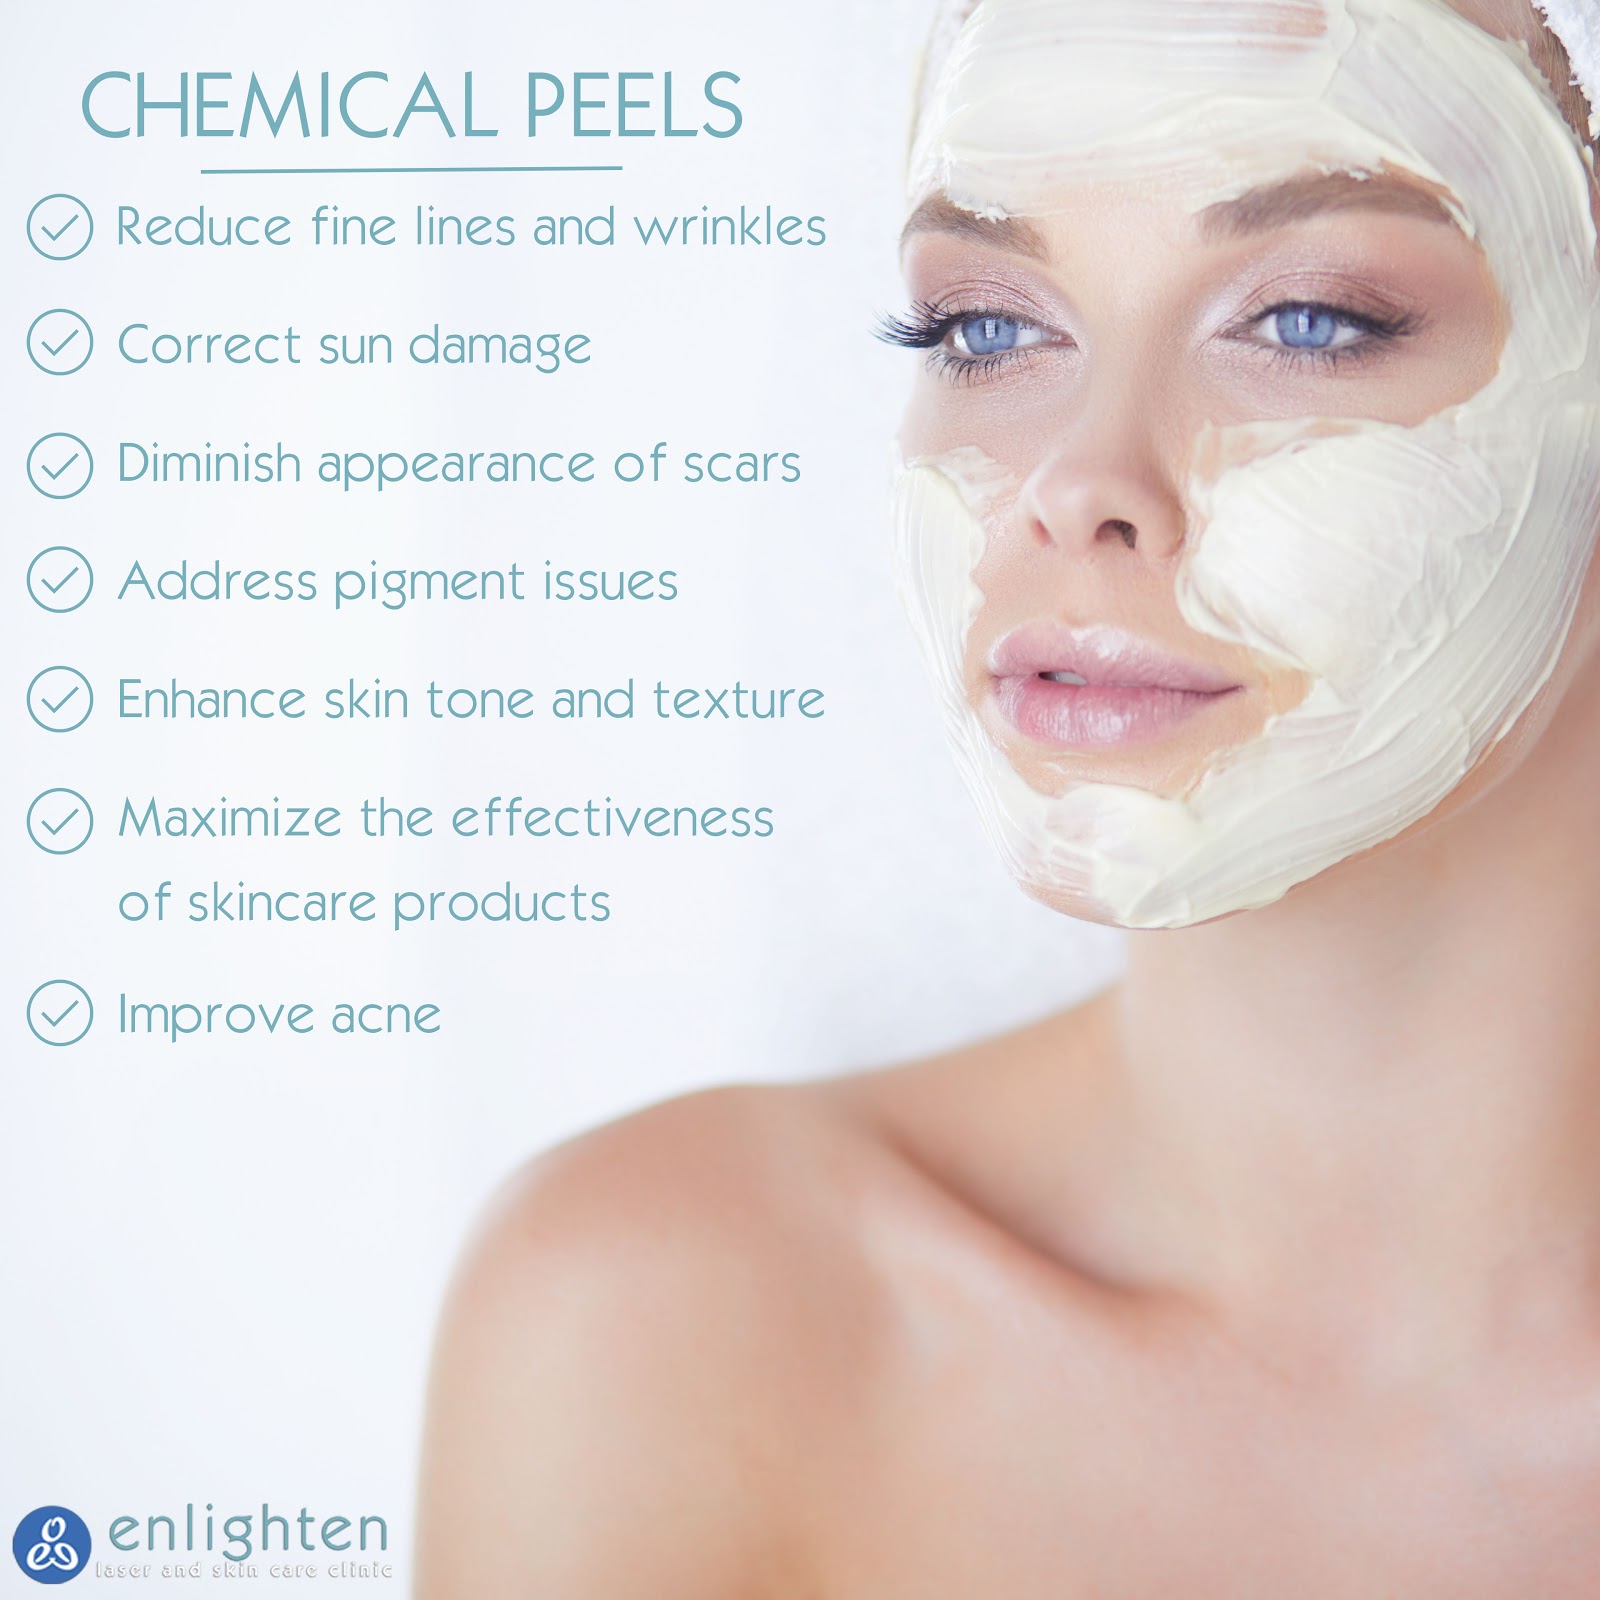 7 Skin Benefits of a Chemical Peel